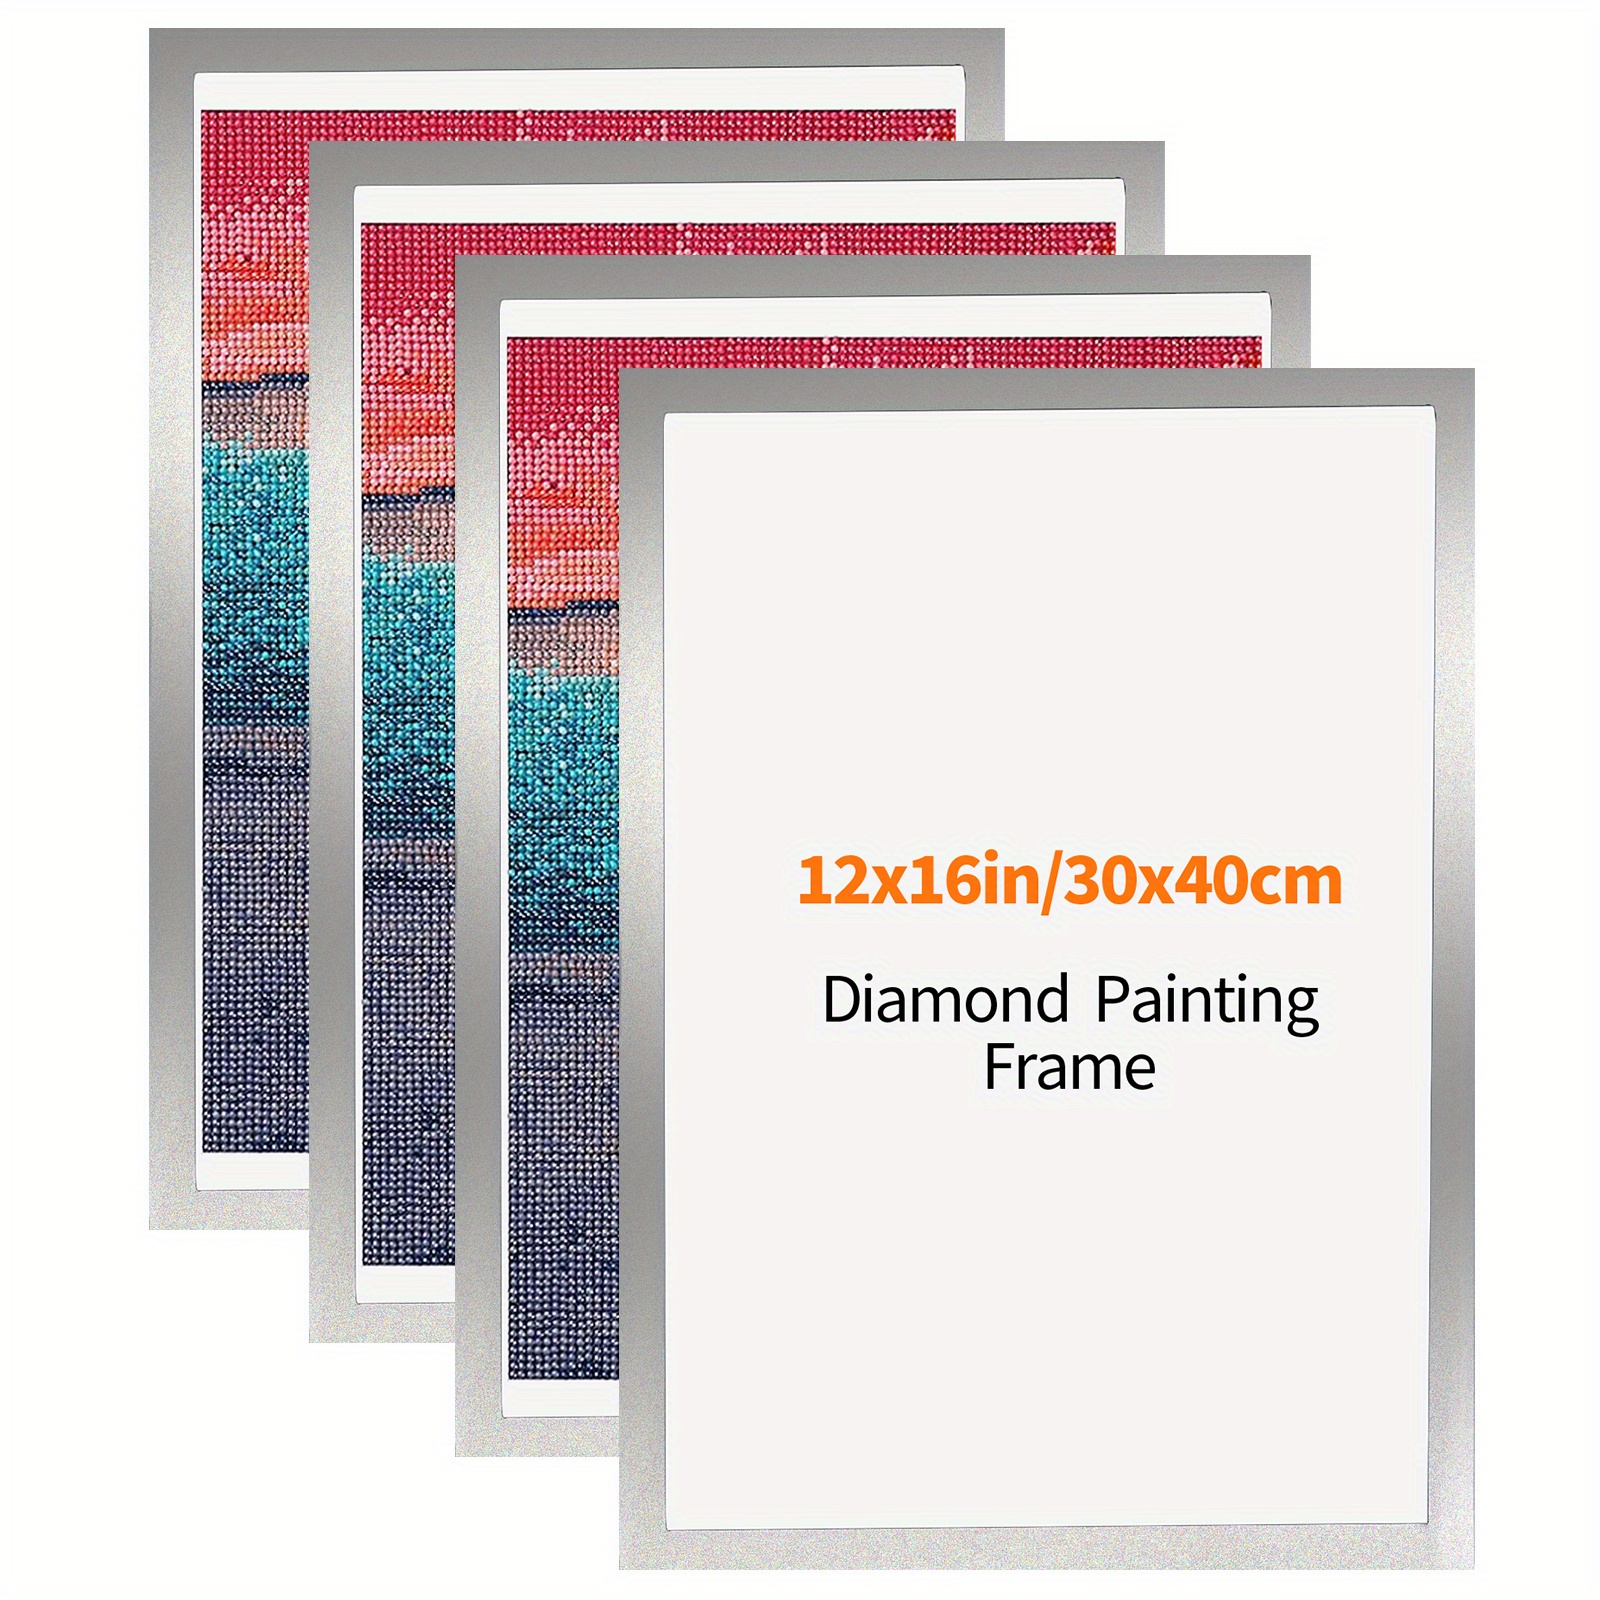 4 Pieces Diamond Picture Frame Magnetic Diamond Art Frames Self